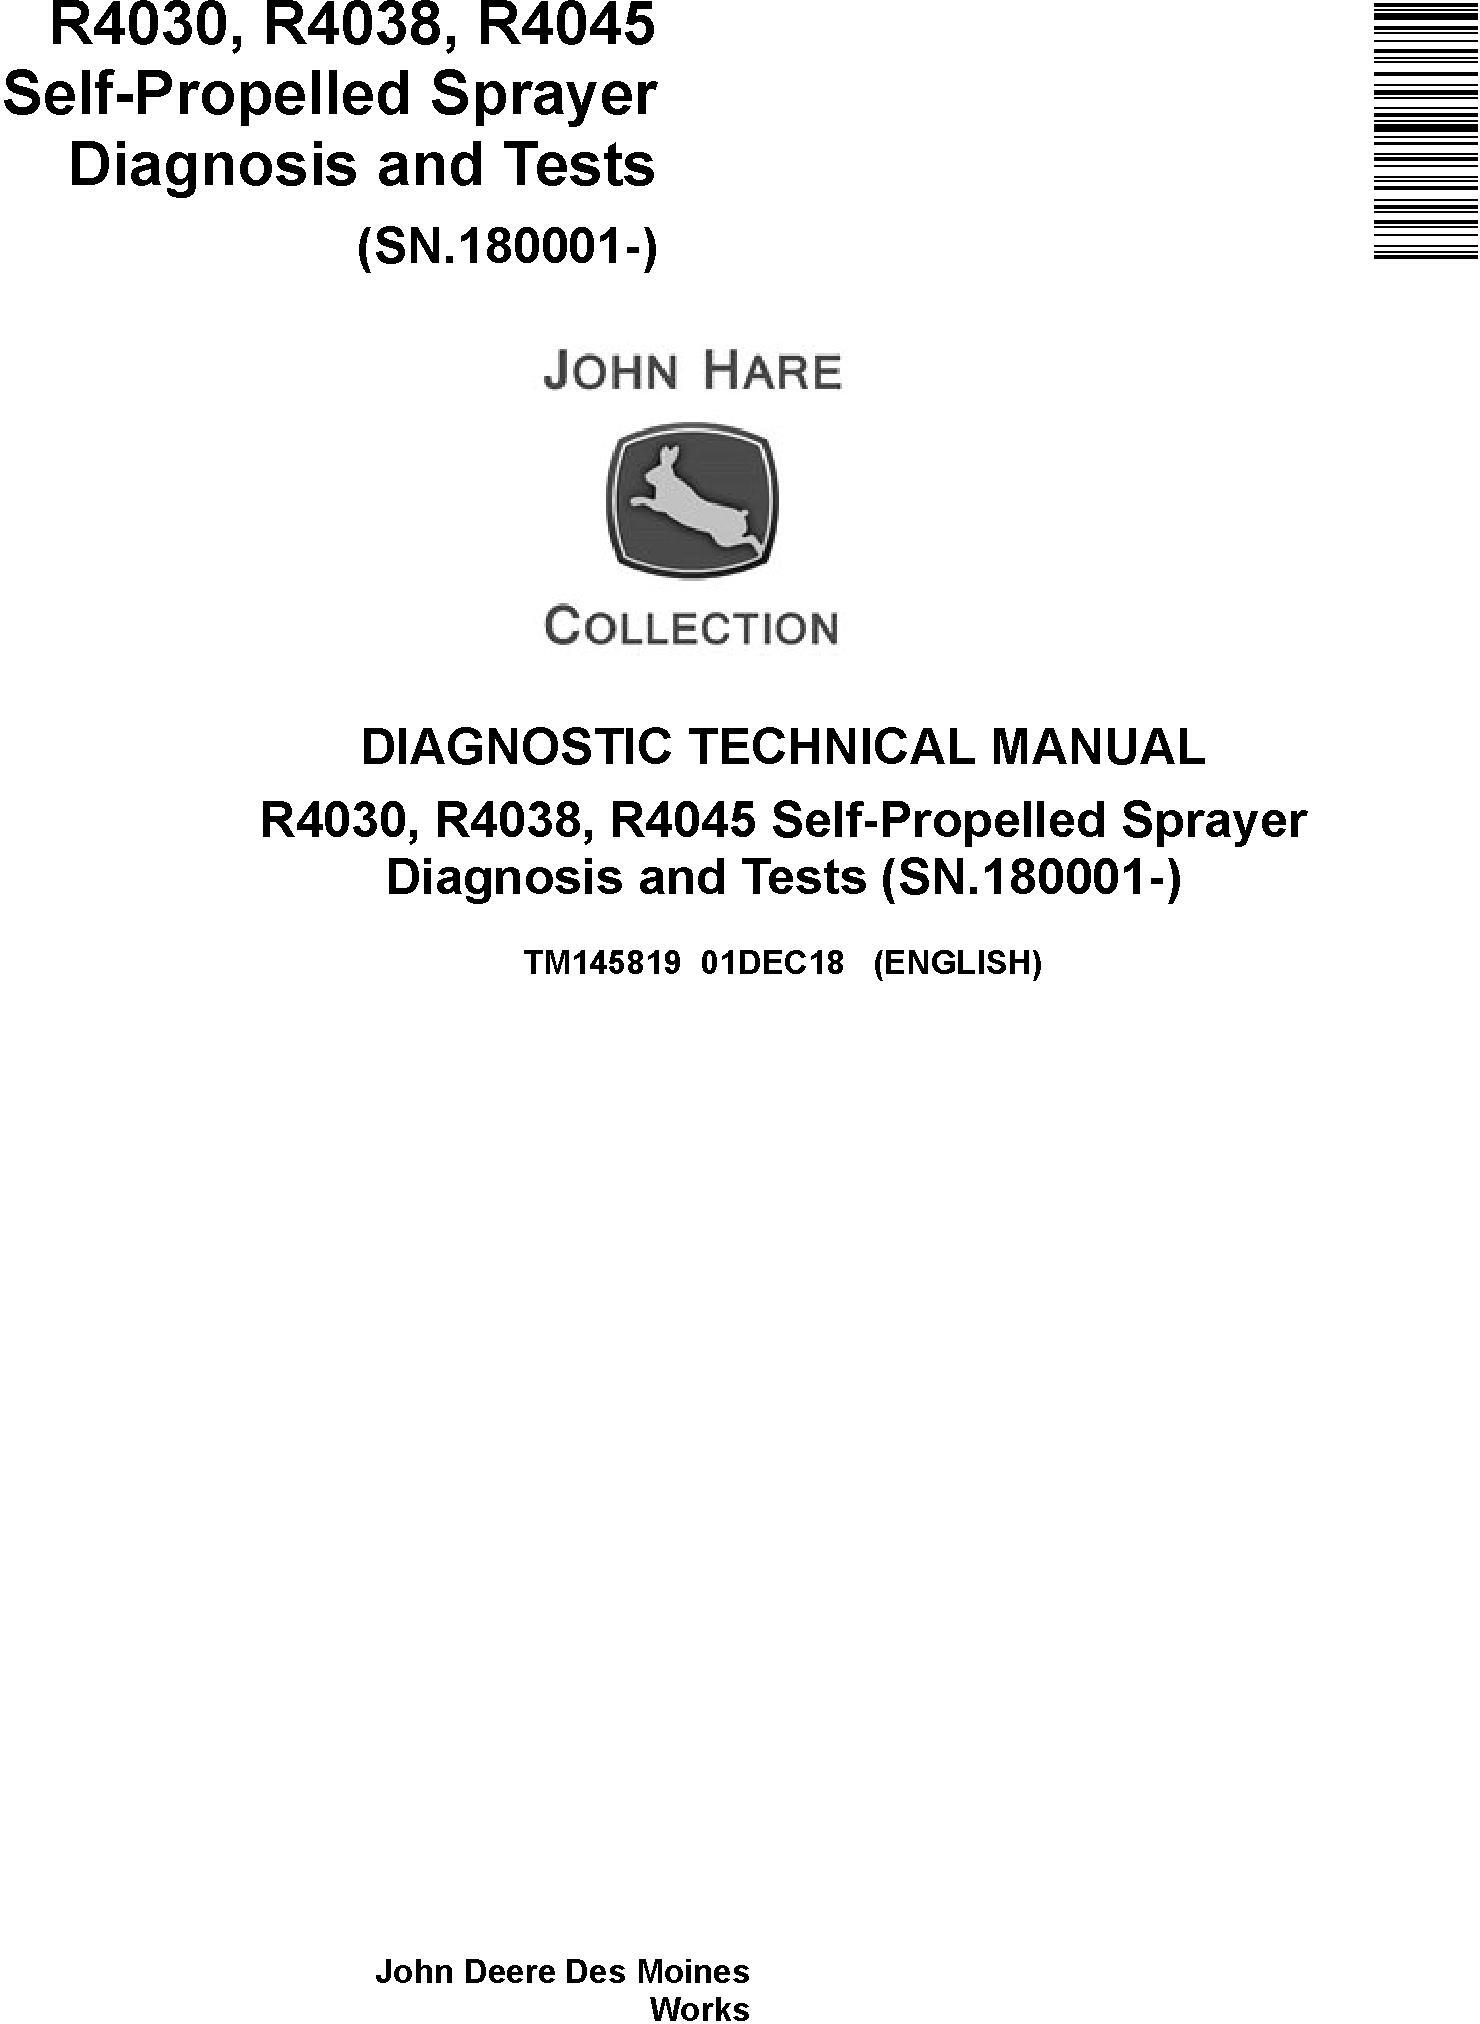 John Deere R4030 R4038 R4045 Self-Propelled Sprayer Diagnostic Test Manual TM145819